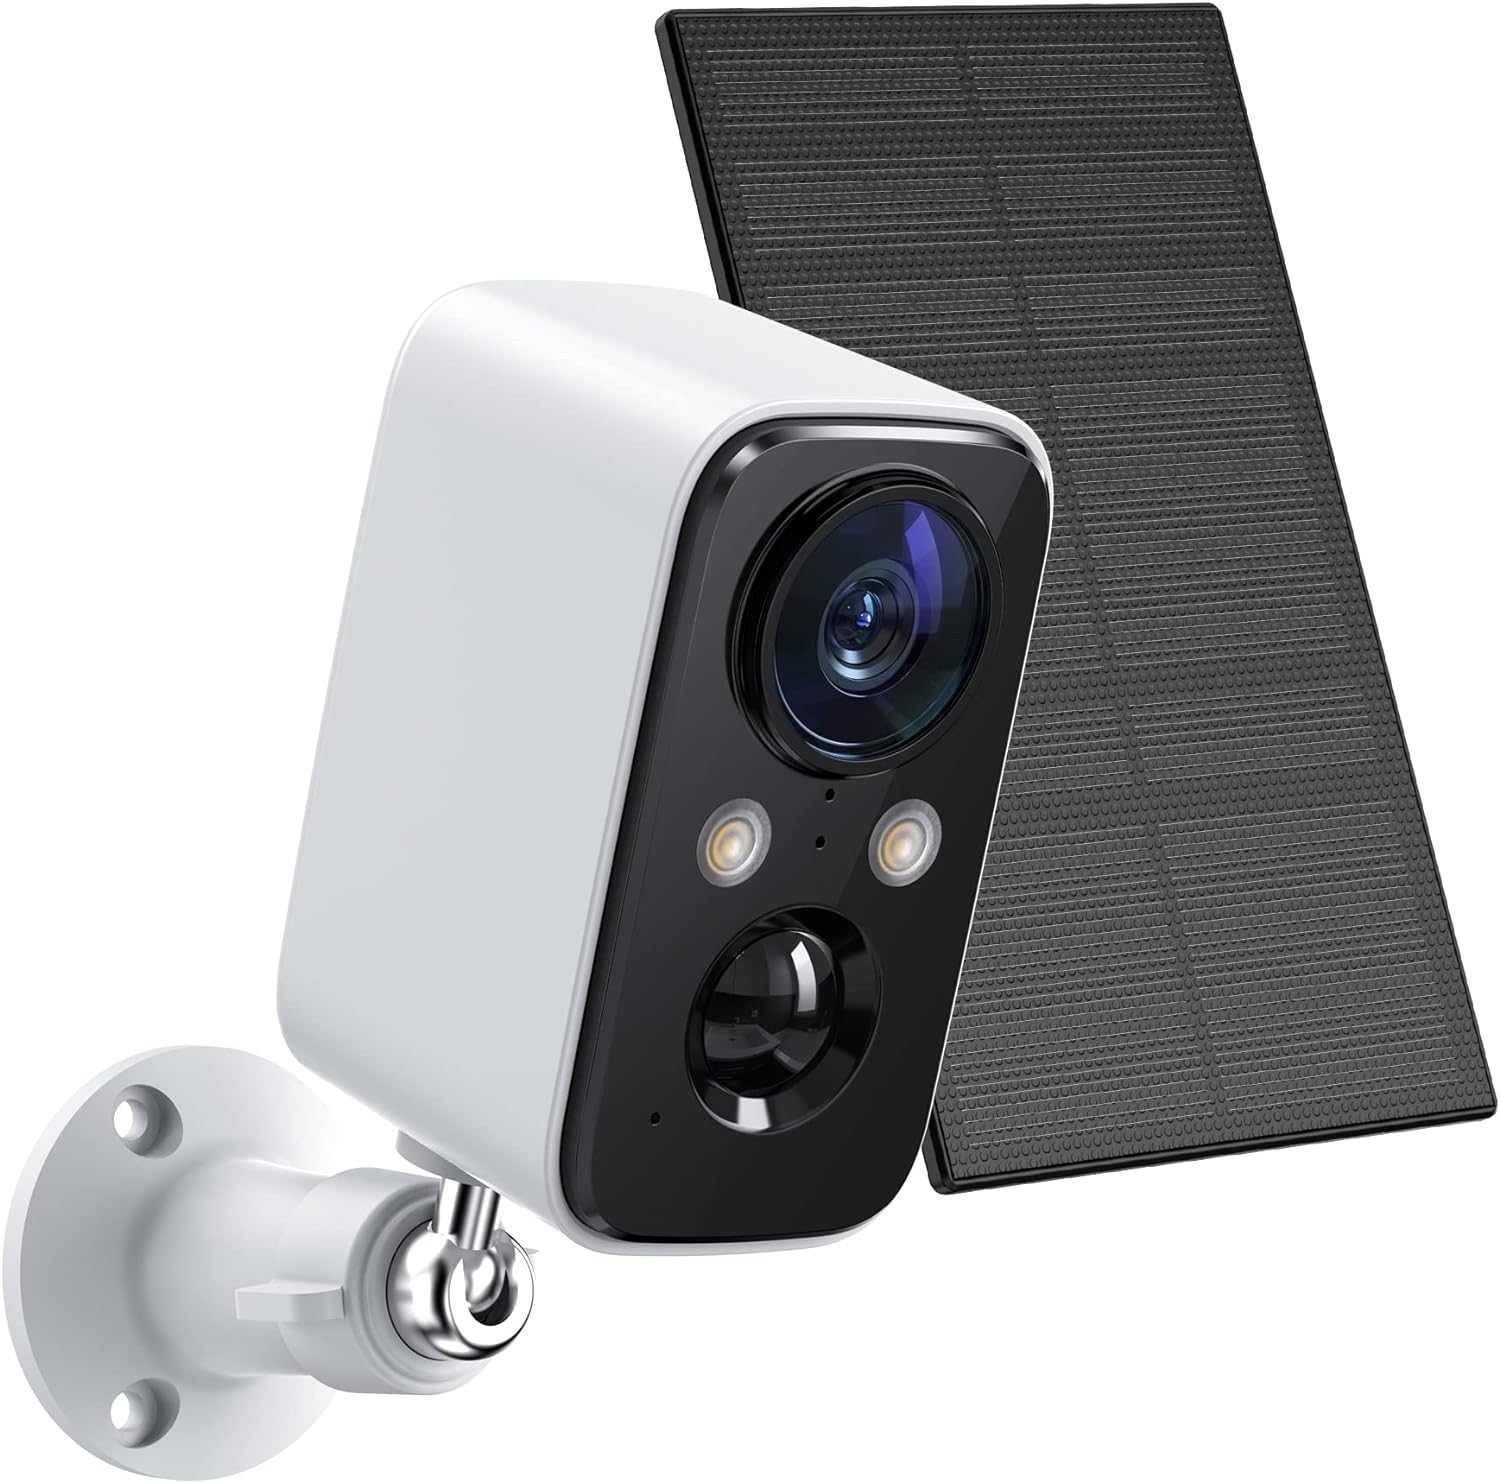 Home Surveillance Security Camera Roundup